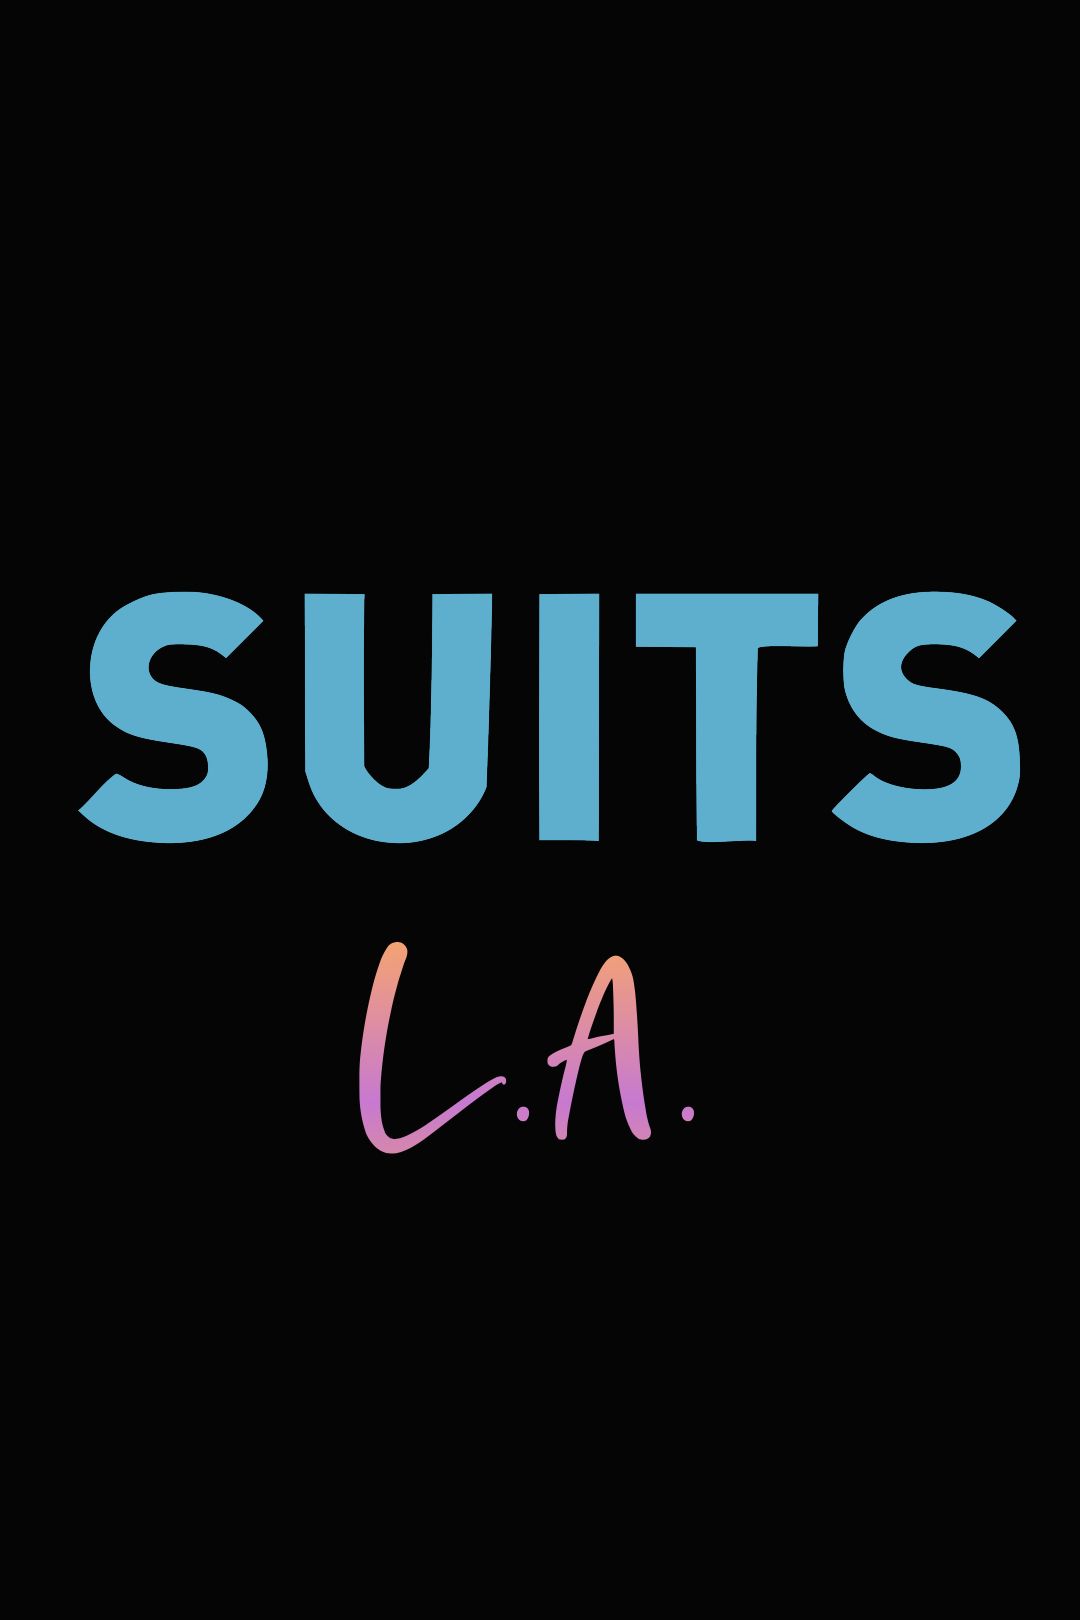 Suits LA TV Series temp logo poster